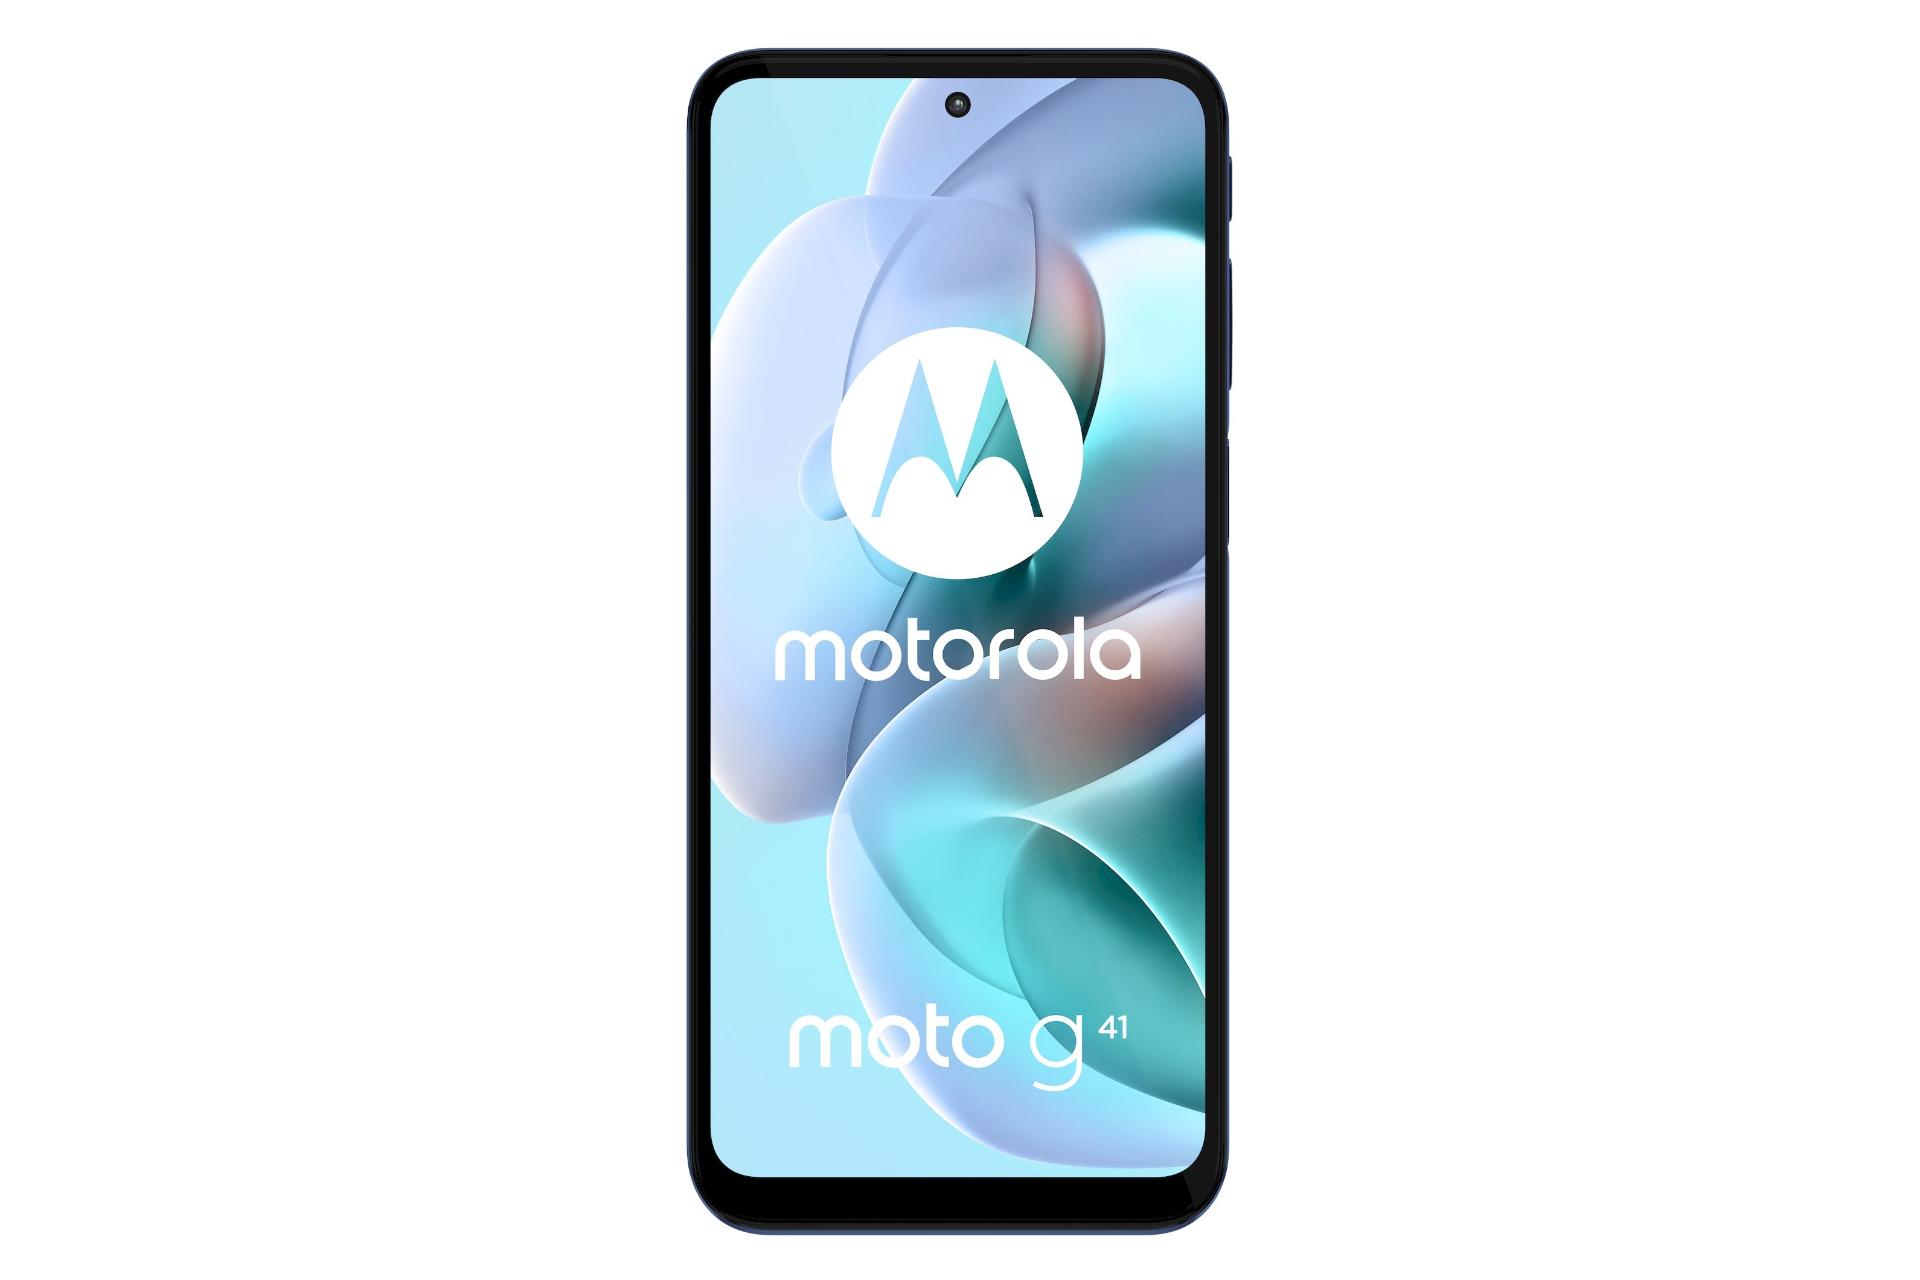 پنل جلو گوشی موبایل موتو G41 موتورولا / Motorola Moto G41